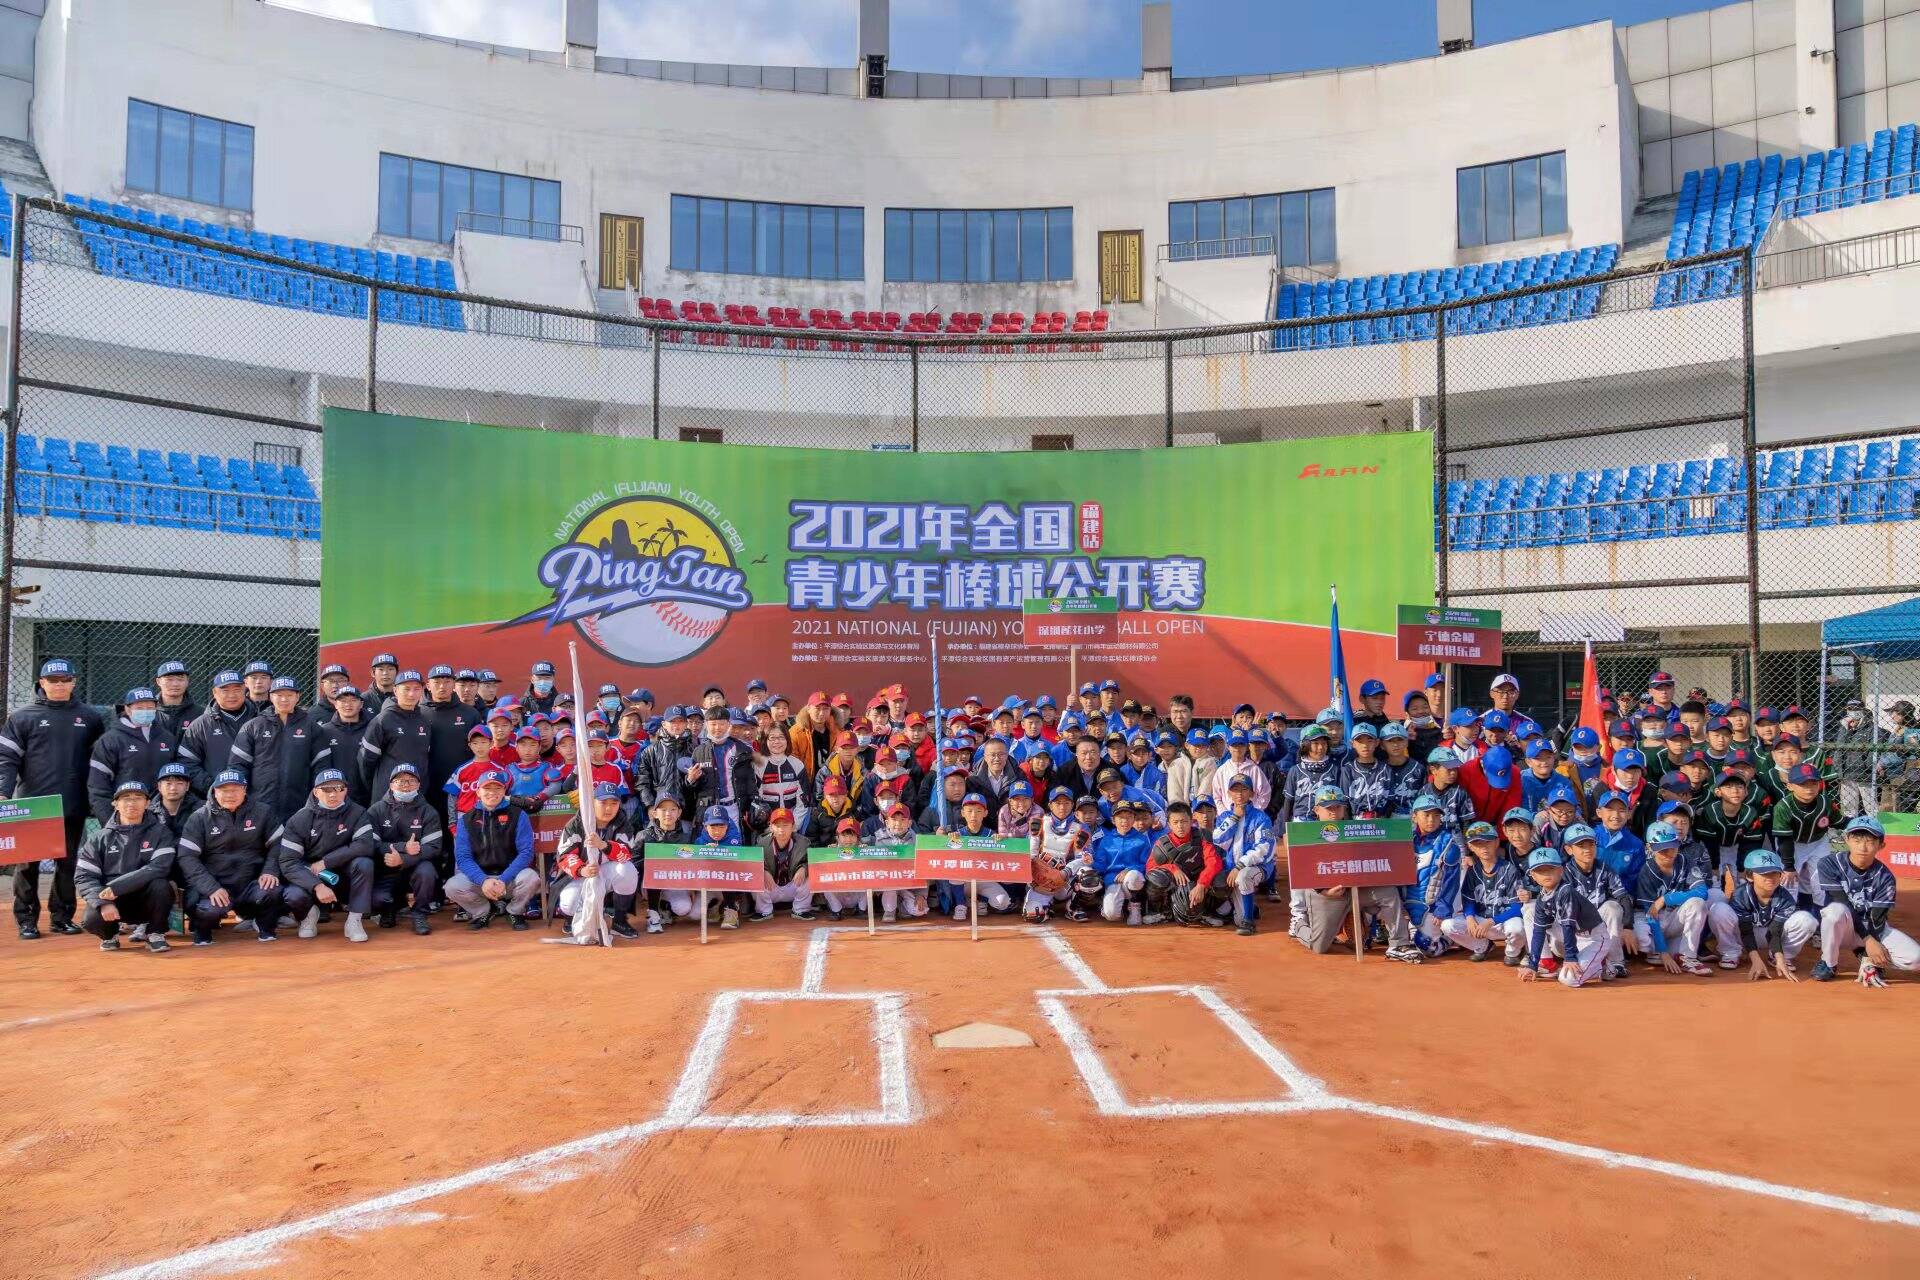 2021 National Youth Baseball Open held in Pingtan